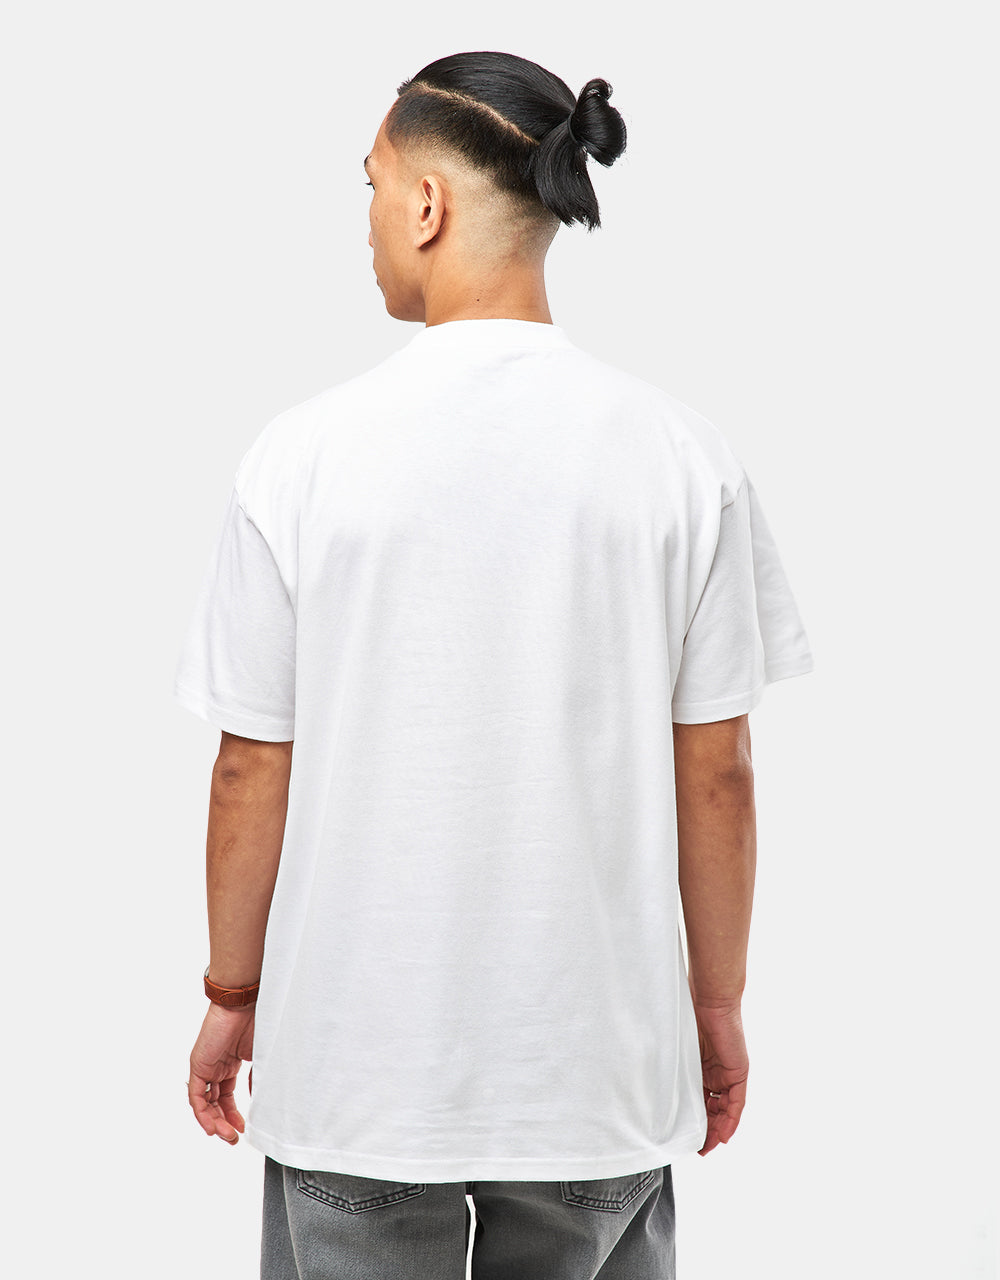 Carhartt WIP Icons T-Shirt - White/Black